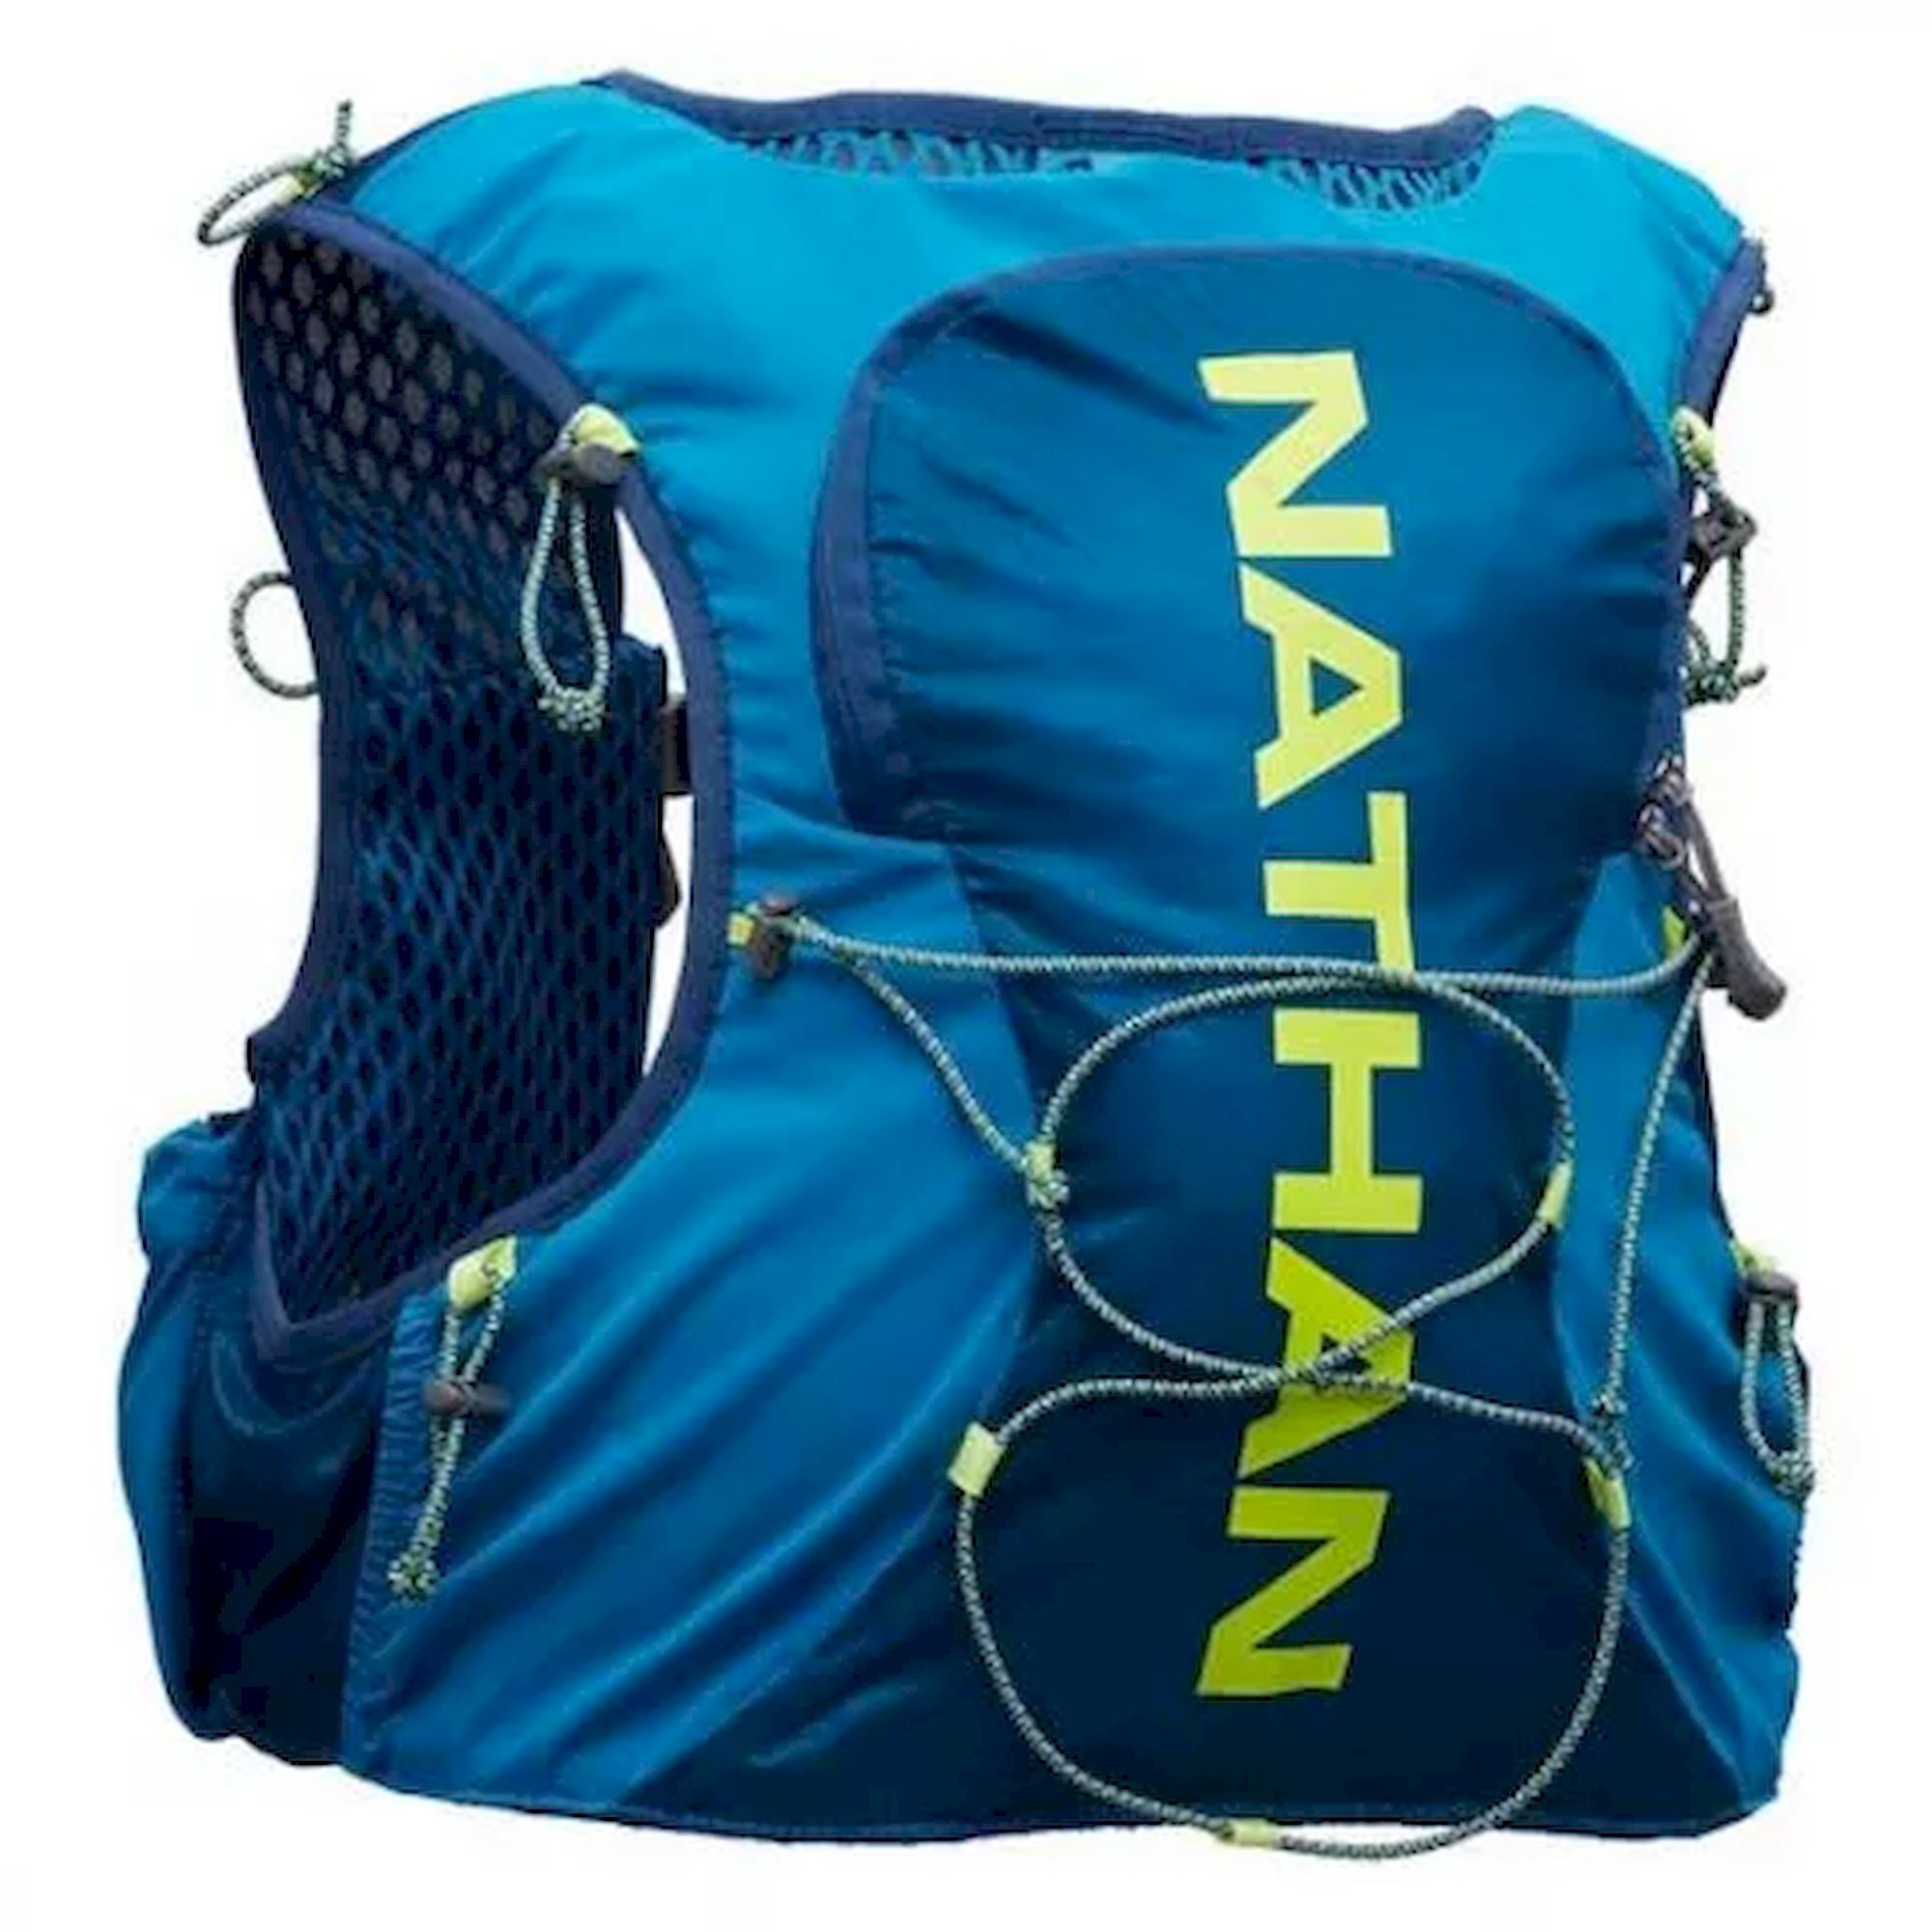 Nathan Vapor Air 3.0 7L - Sac à dos d'hydratation